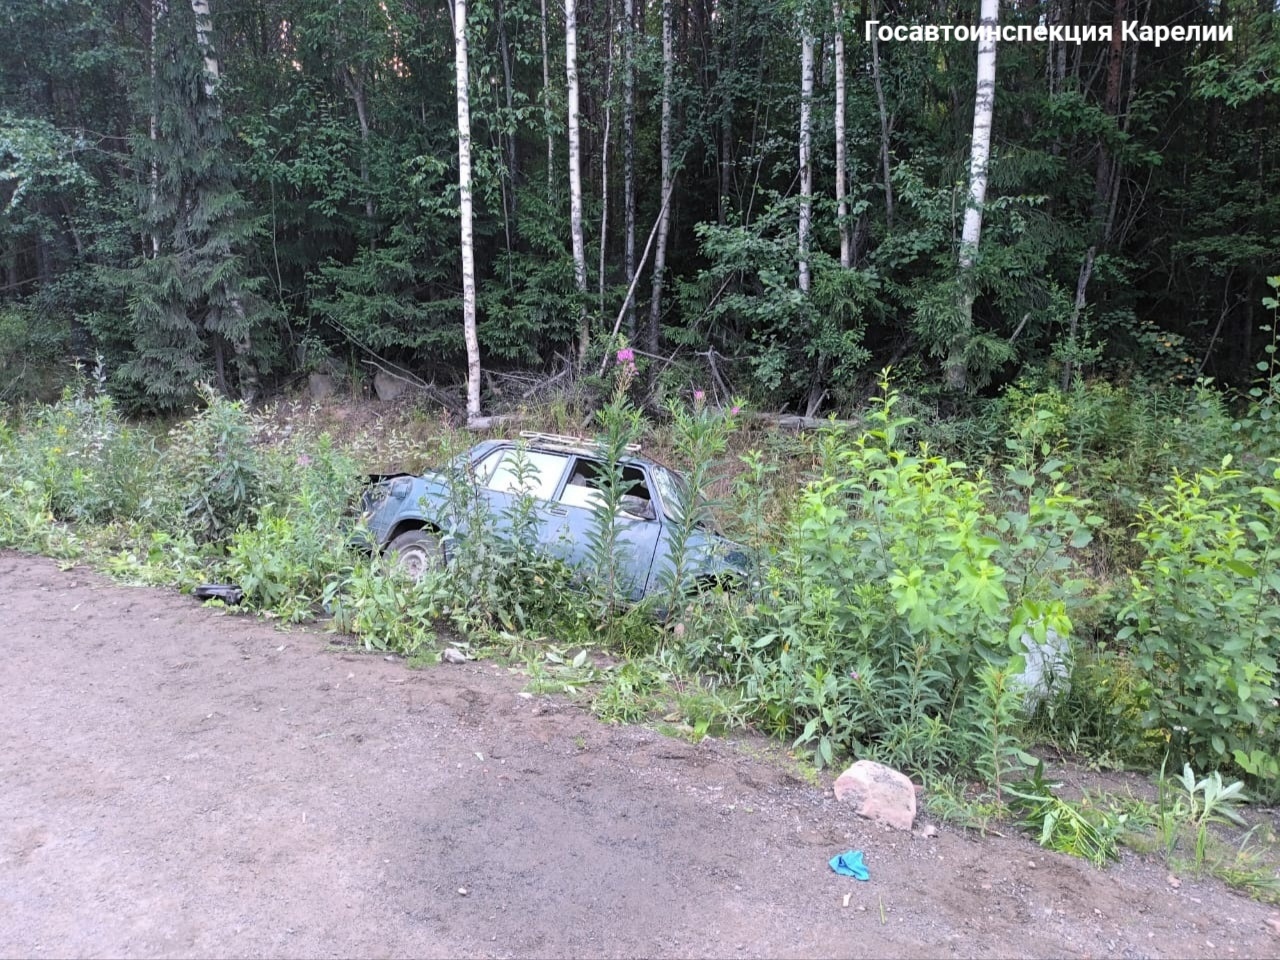 Автомобиль пенсионерки на юге Карелии занесло на дороге (ФОТО)